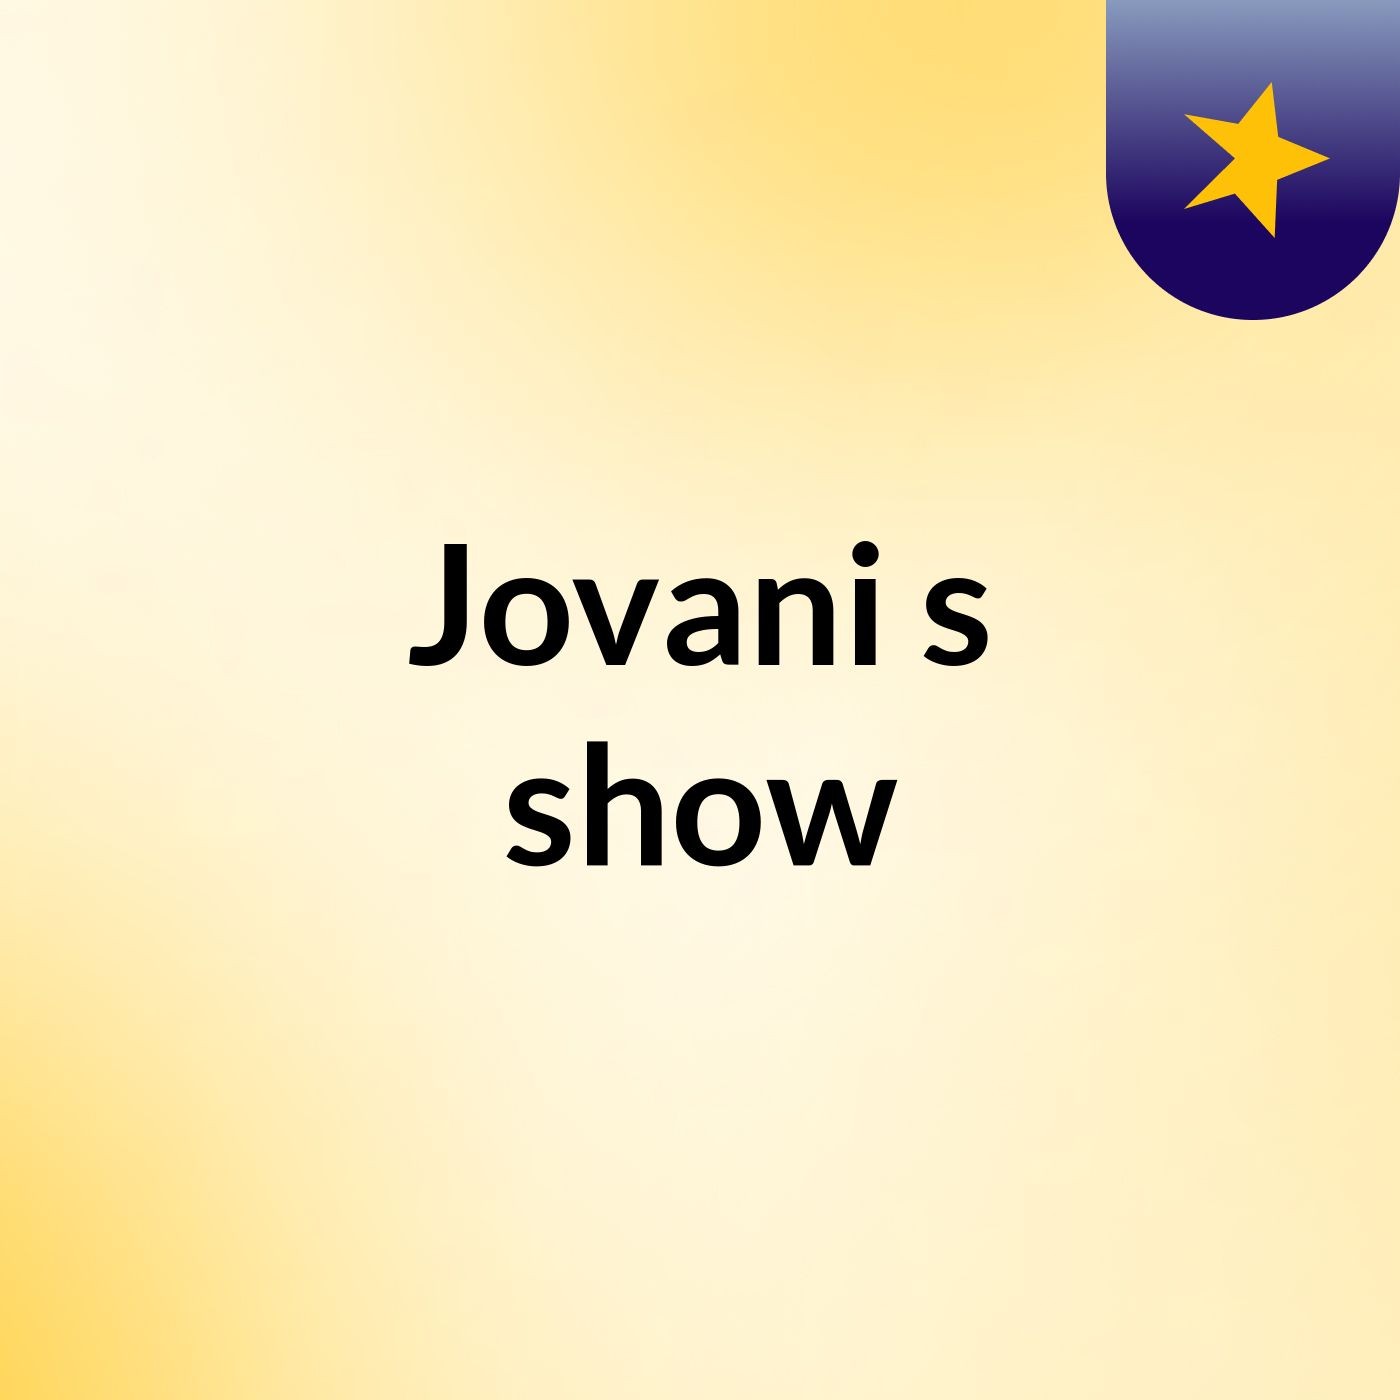 Jovani's show